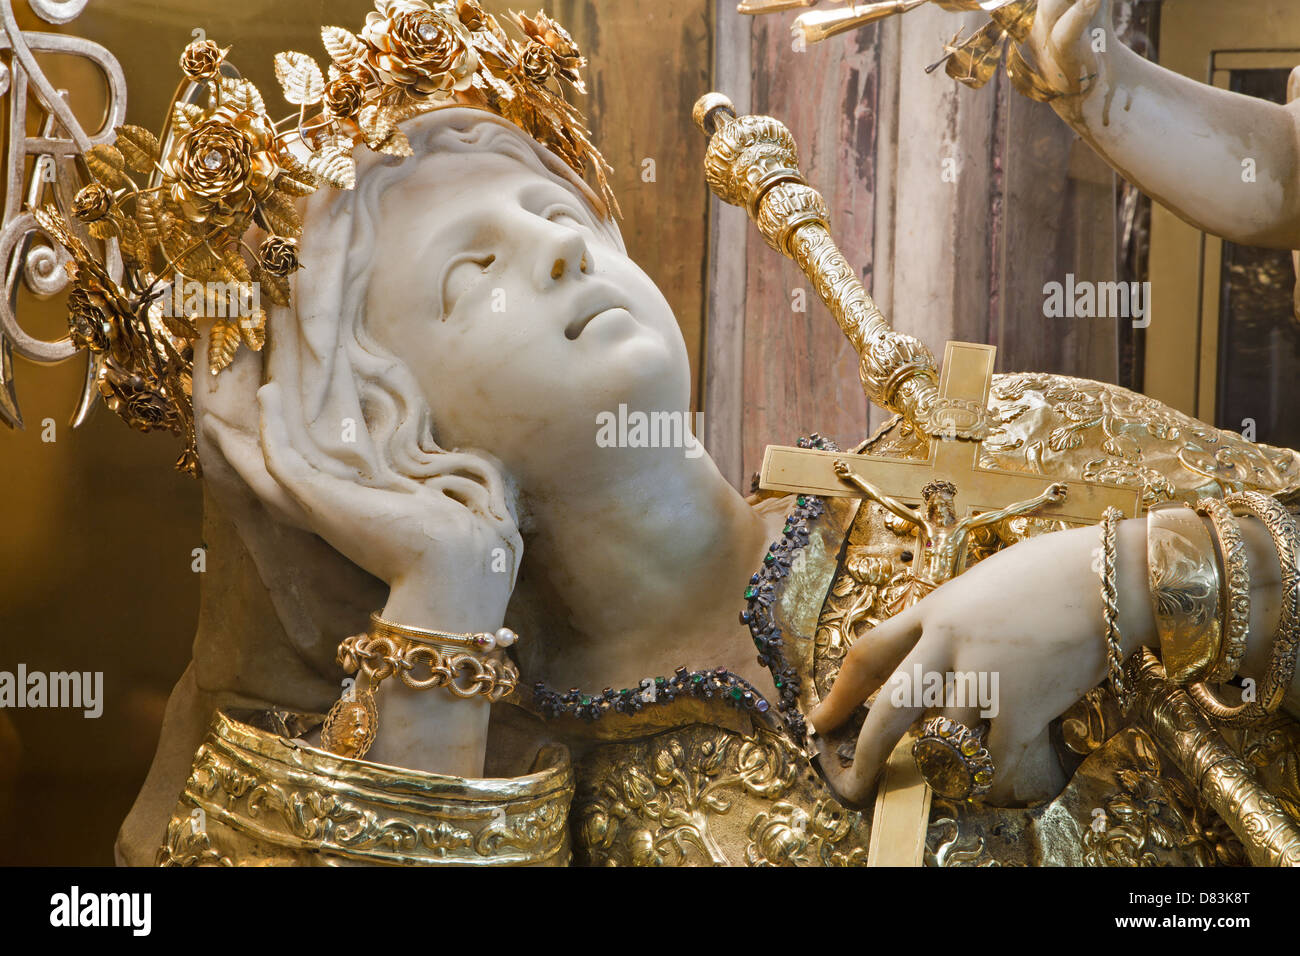 PALERMO - APRIL 9: Statue of Santa Rosalia patron saint of Palermo in cave of Santuario Santa Rosalia. Stock Photo